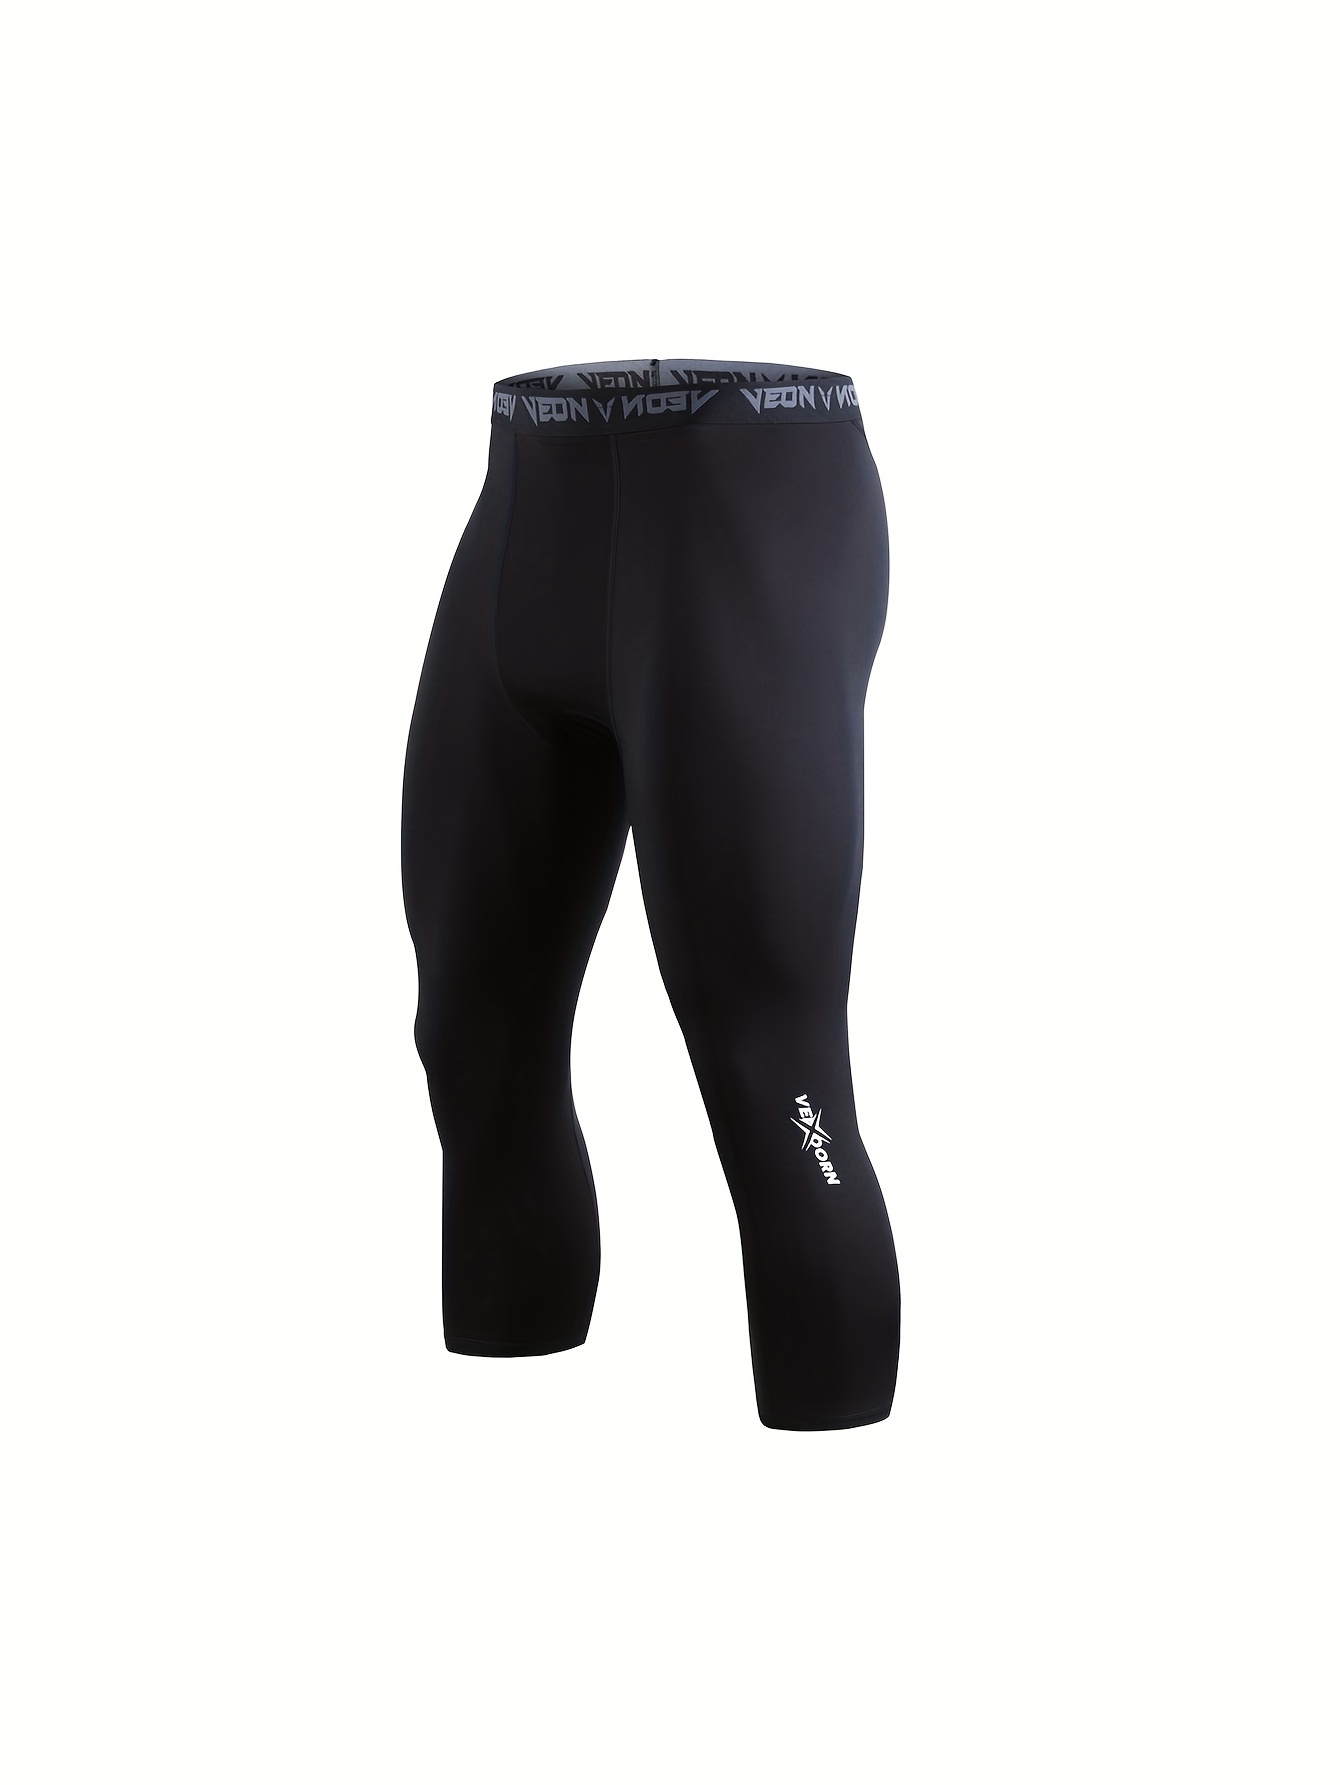  Compression Pants for Men 3/4 Capri Leggings Dry Fit